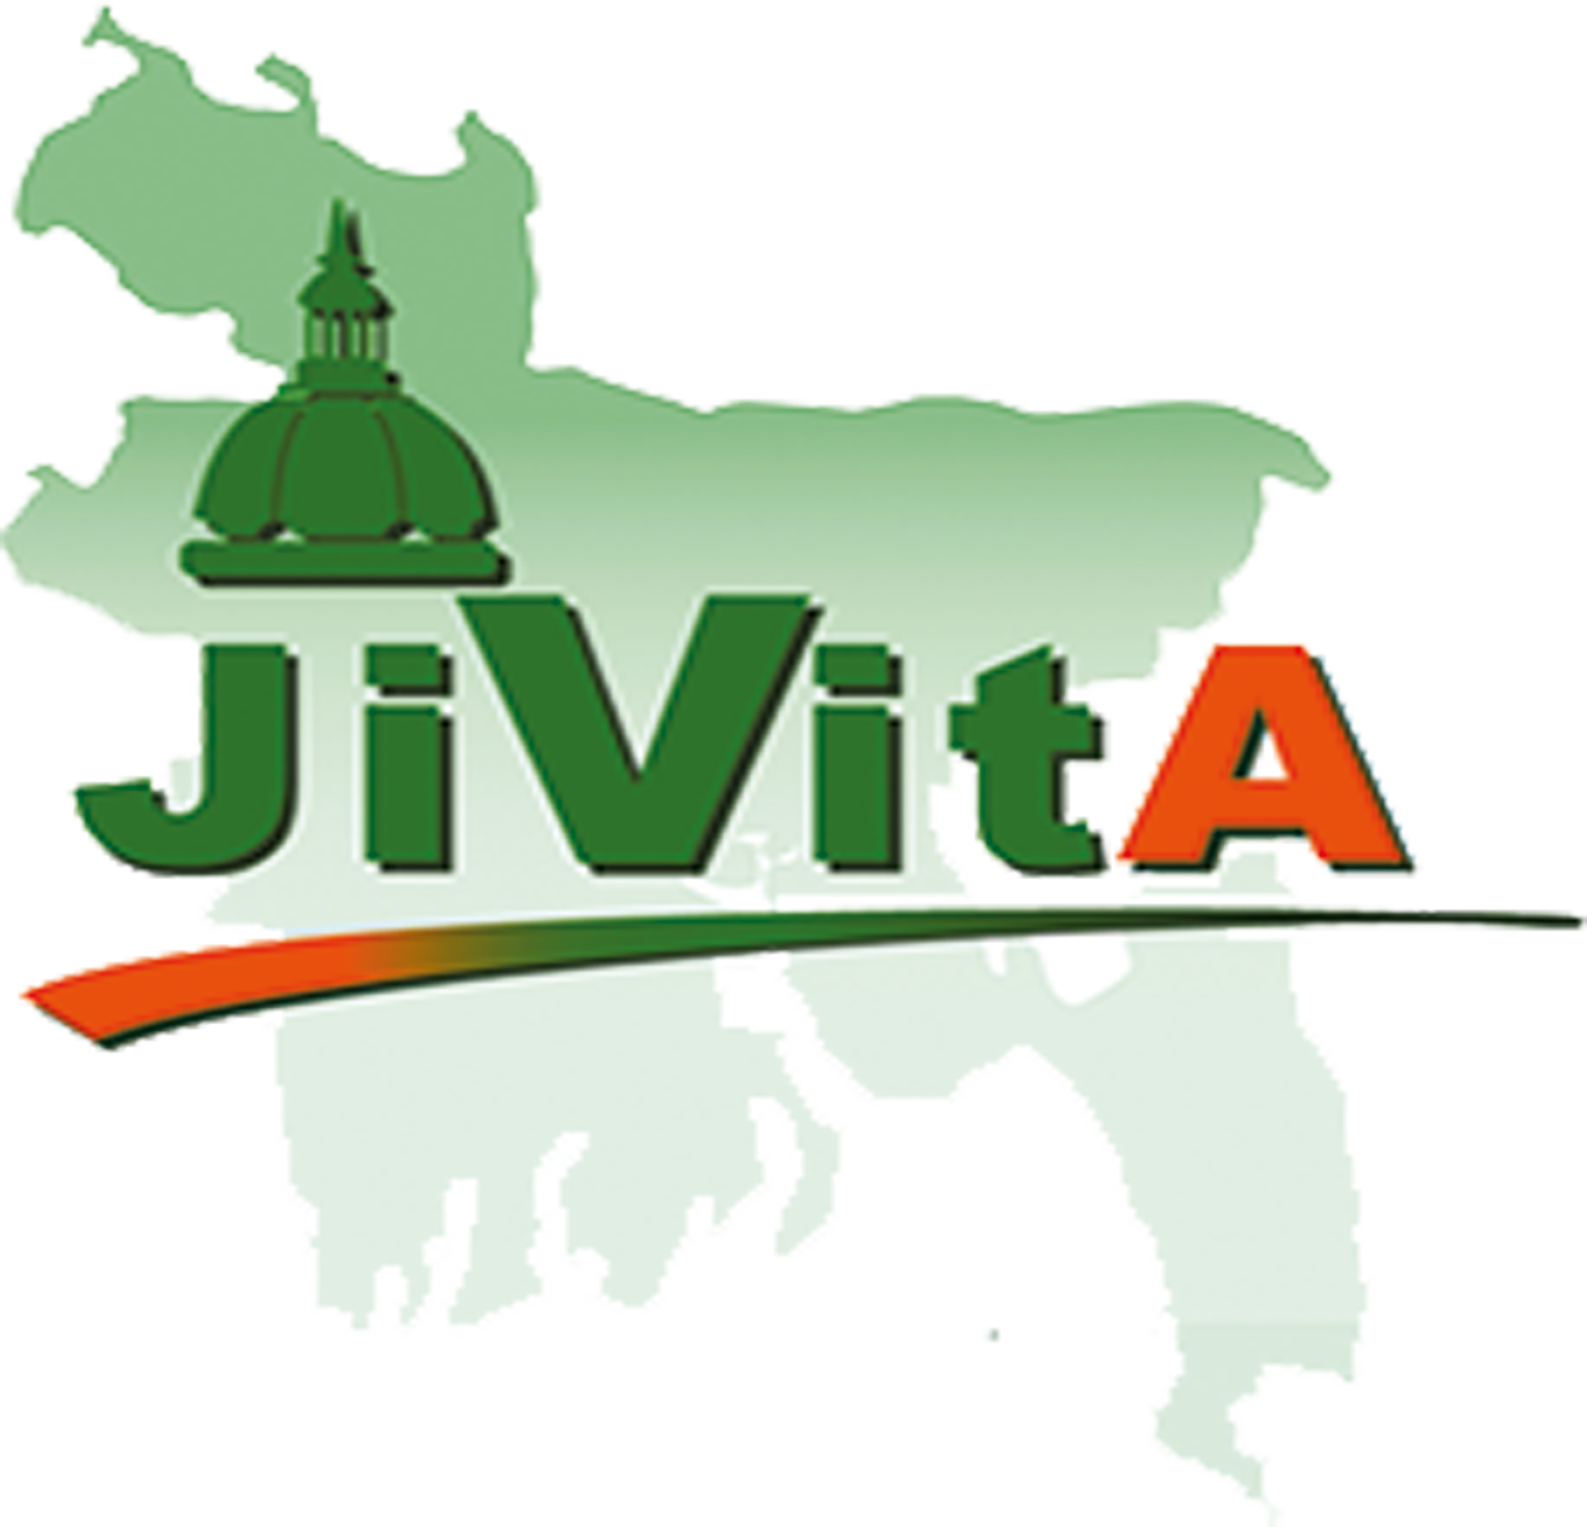 JiVitA Maternal and Child Health Research Project